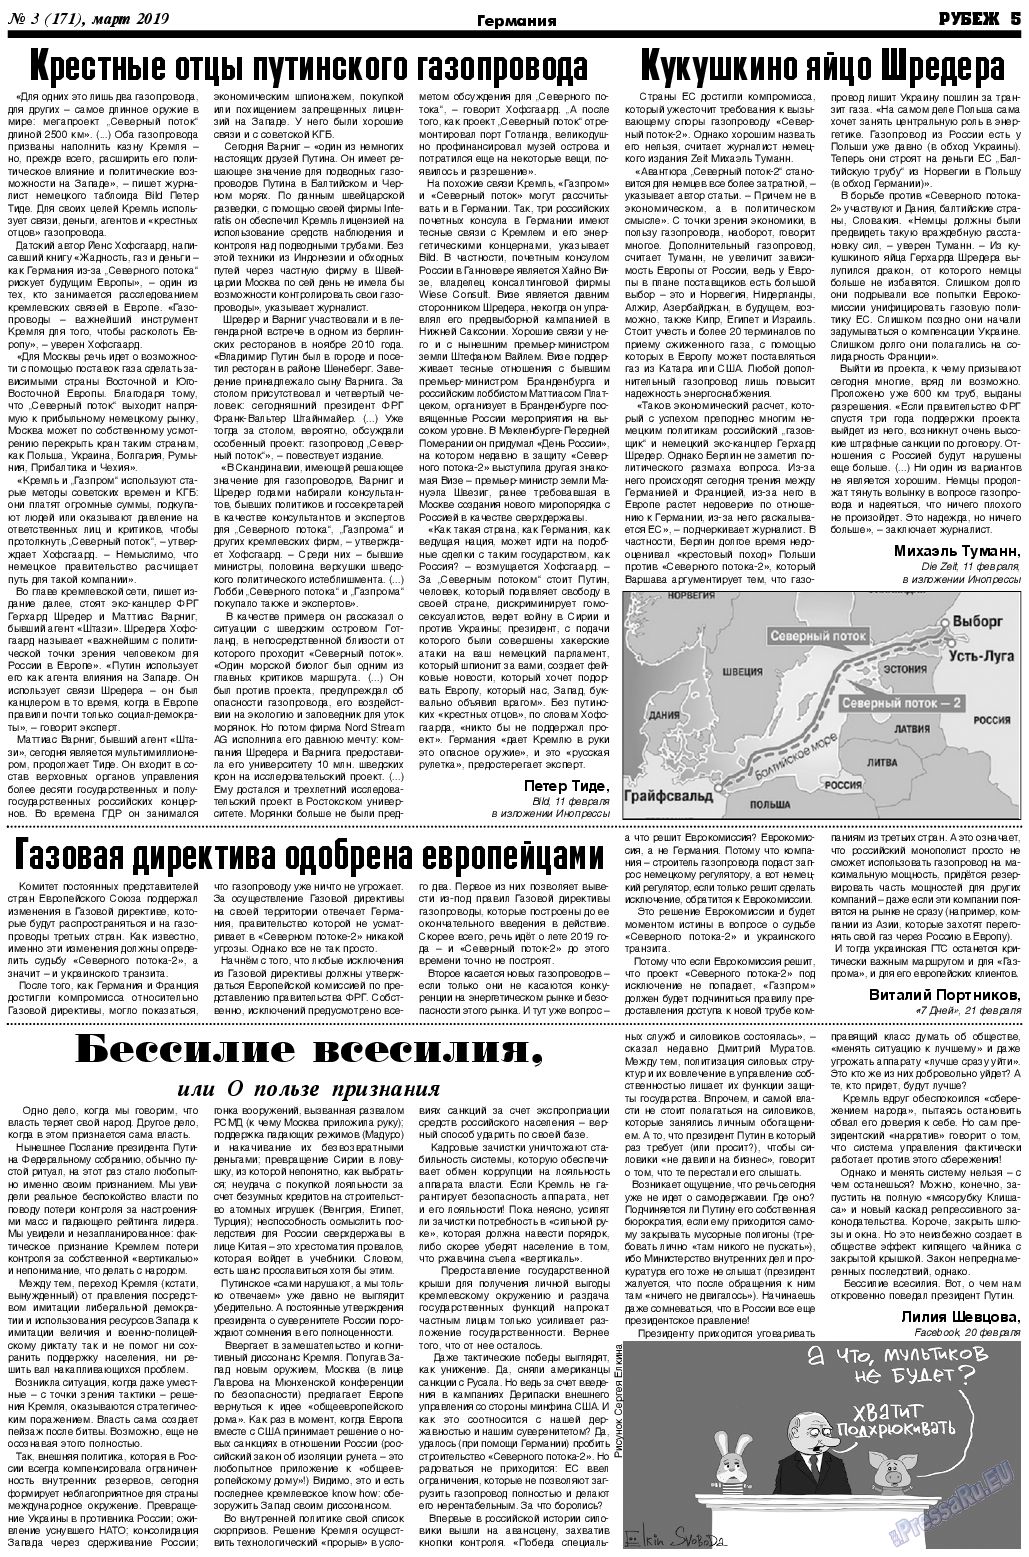 Рубеж, газета. 2019 №3 стр.5